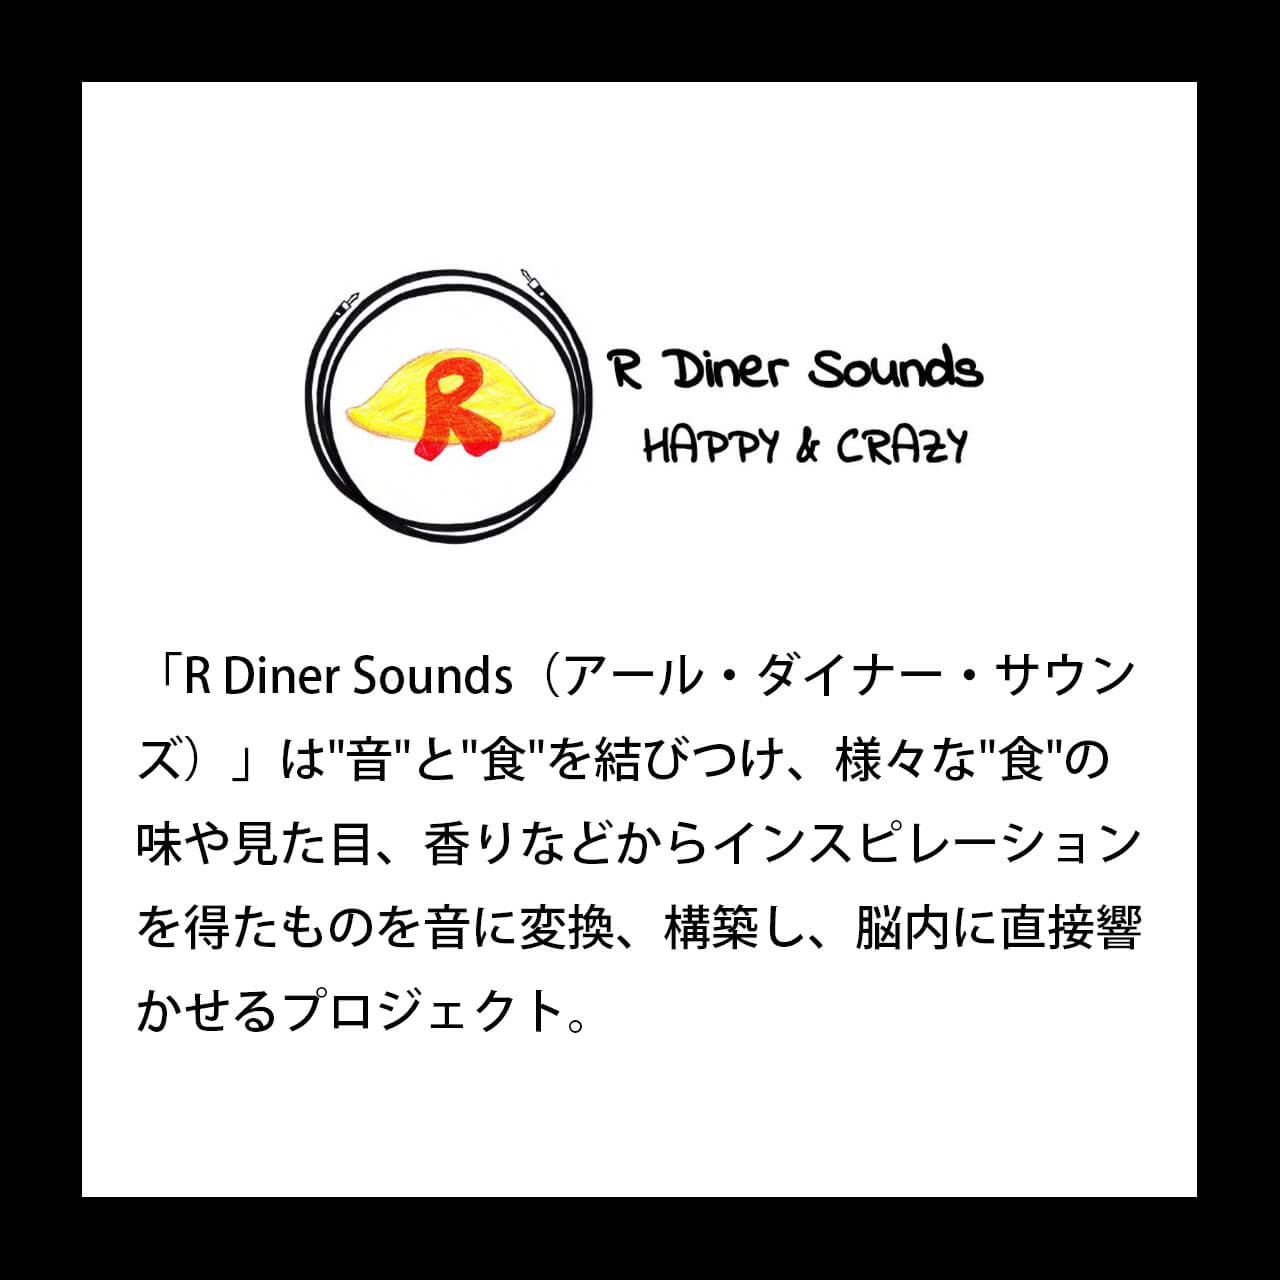 R Diner Sounds（アール・ダイナー・サウンズ）